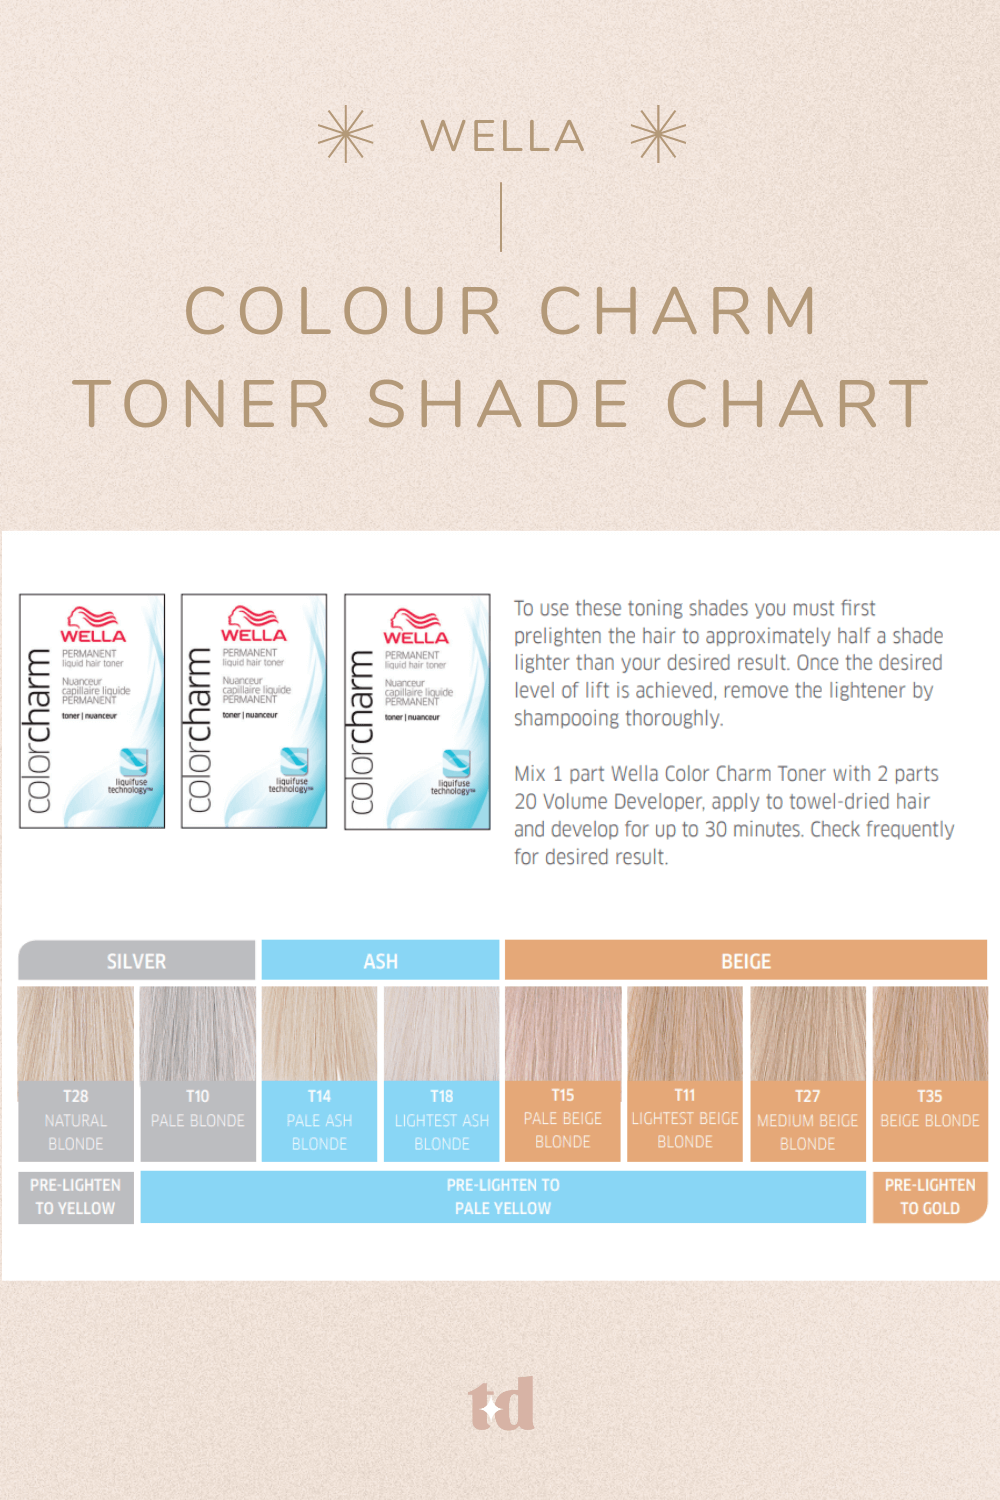 Wella Colour Charm Toner Shade Chart